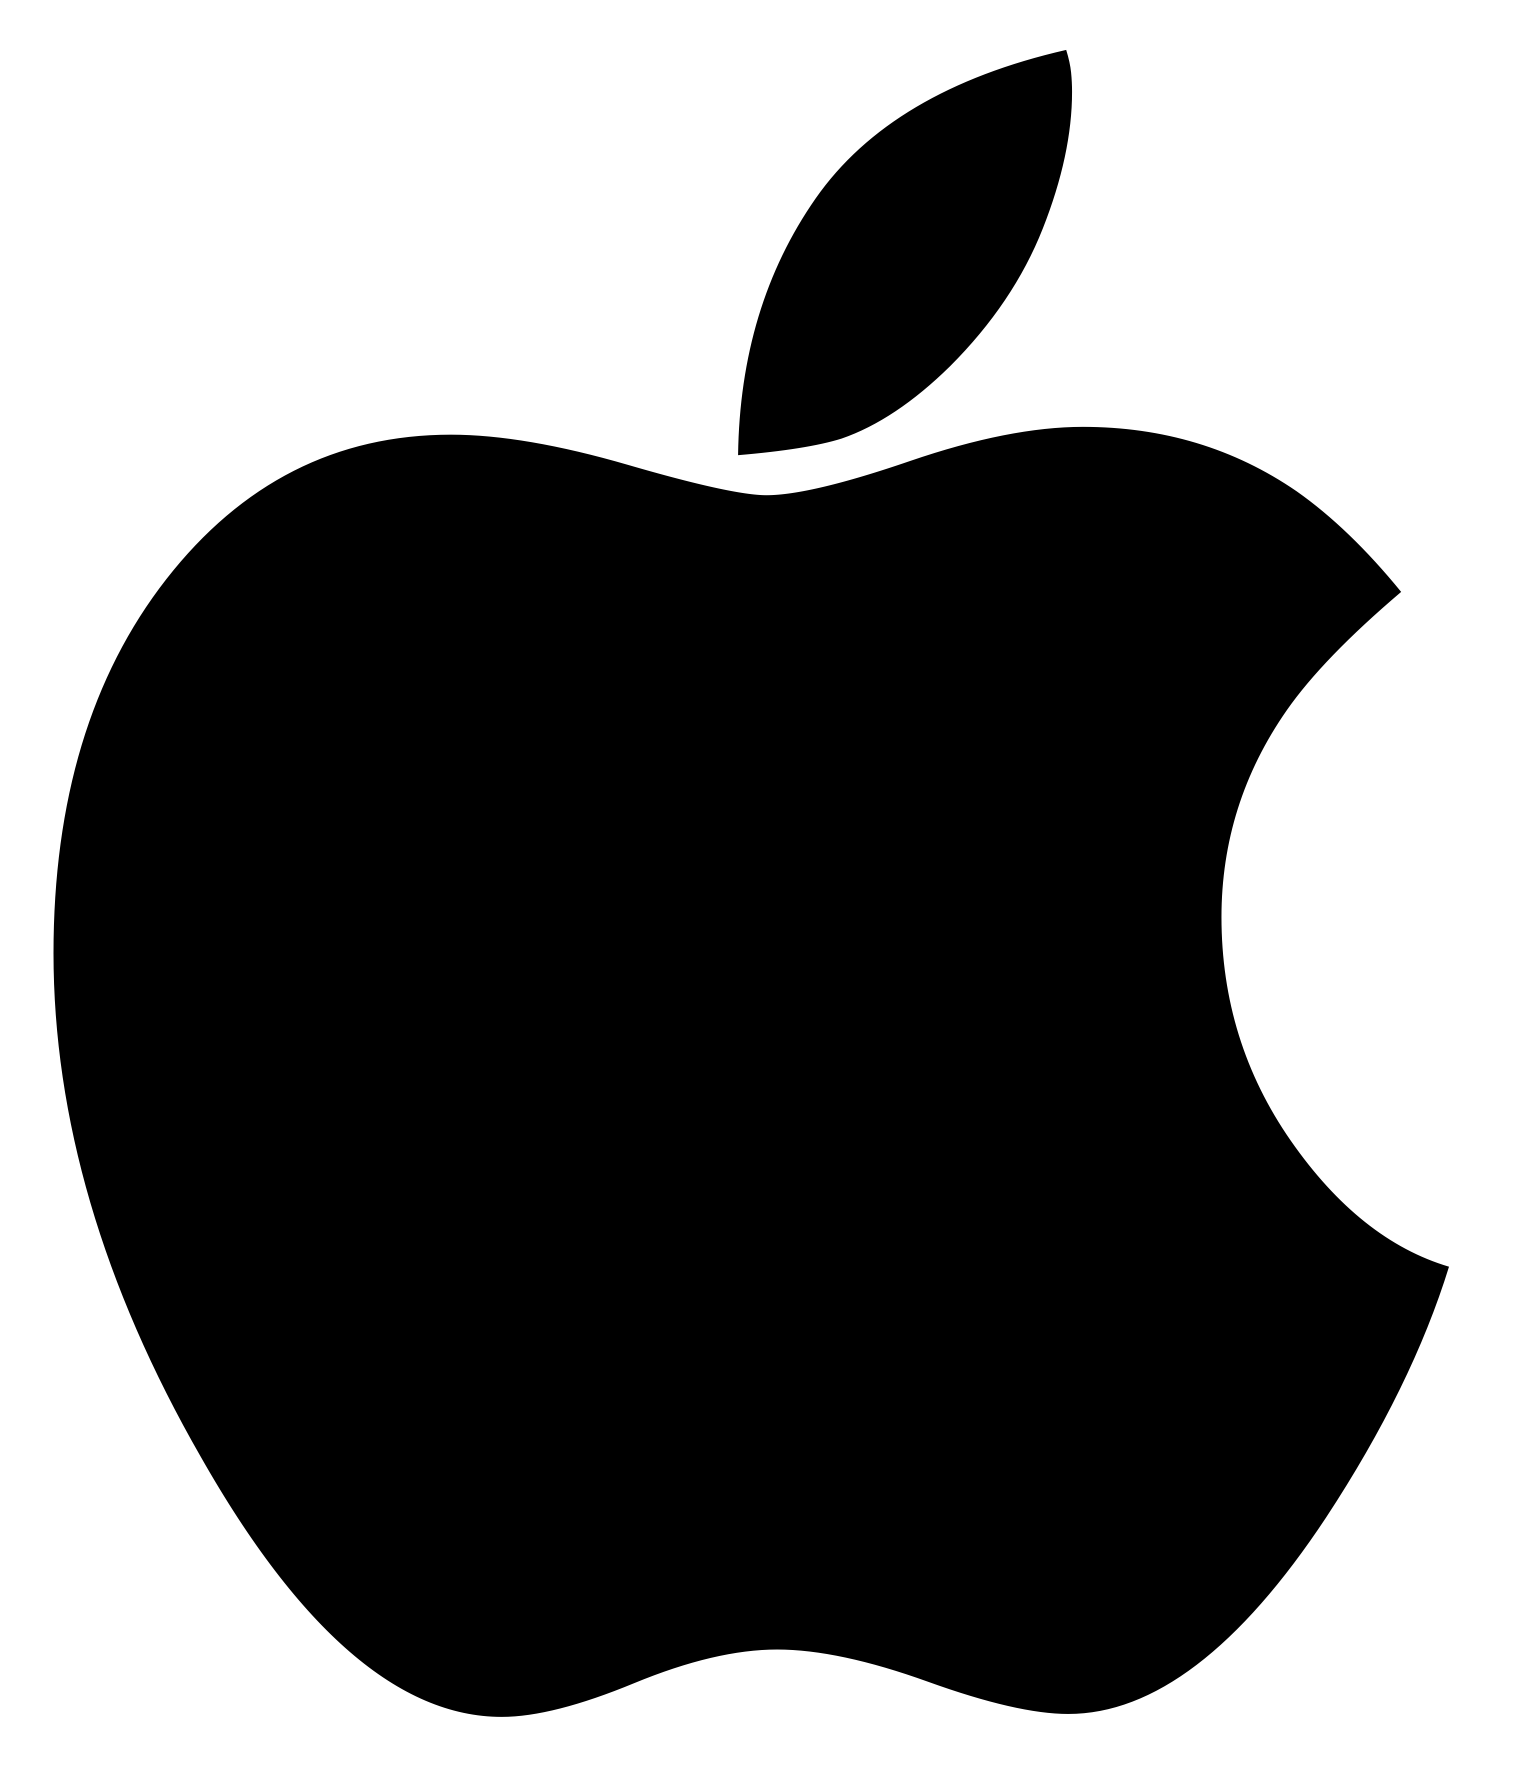 Apple says sorry to WordPress apple logo